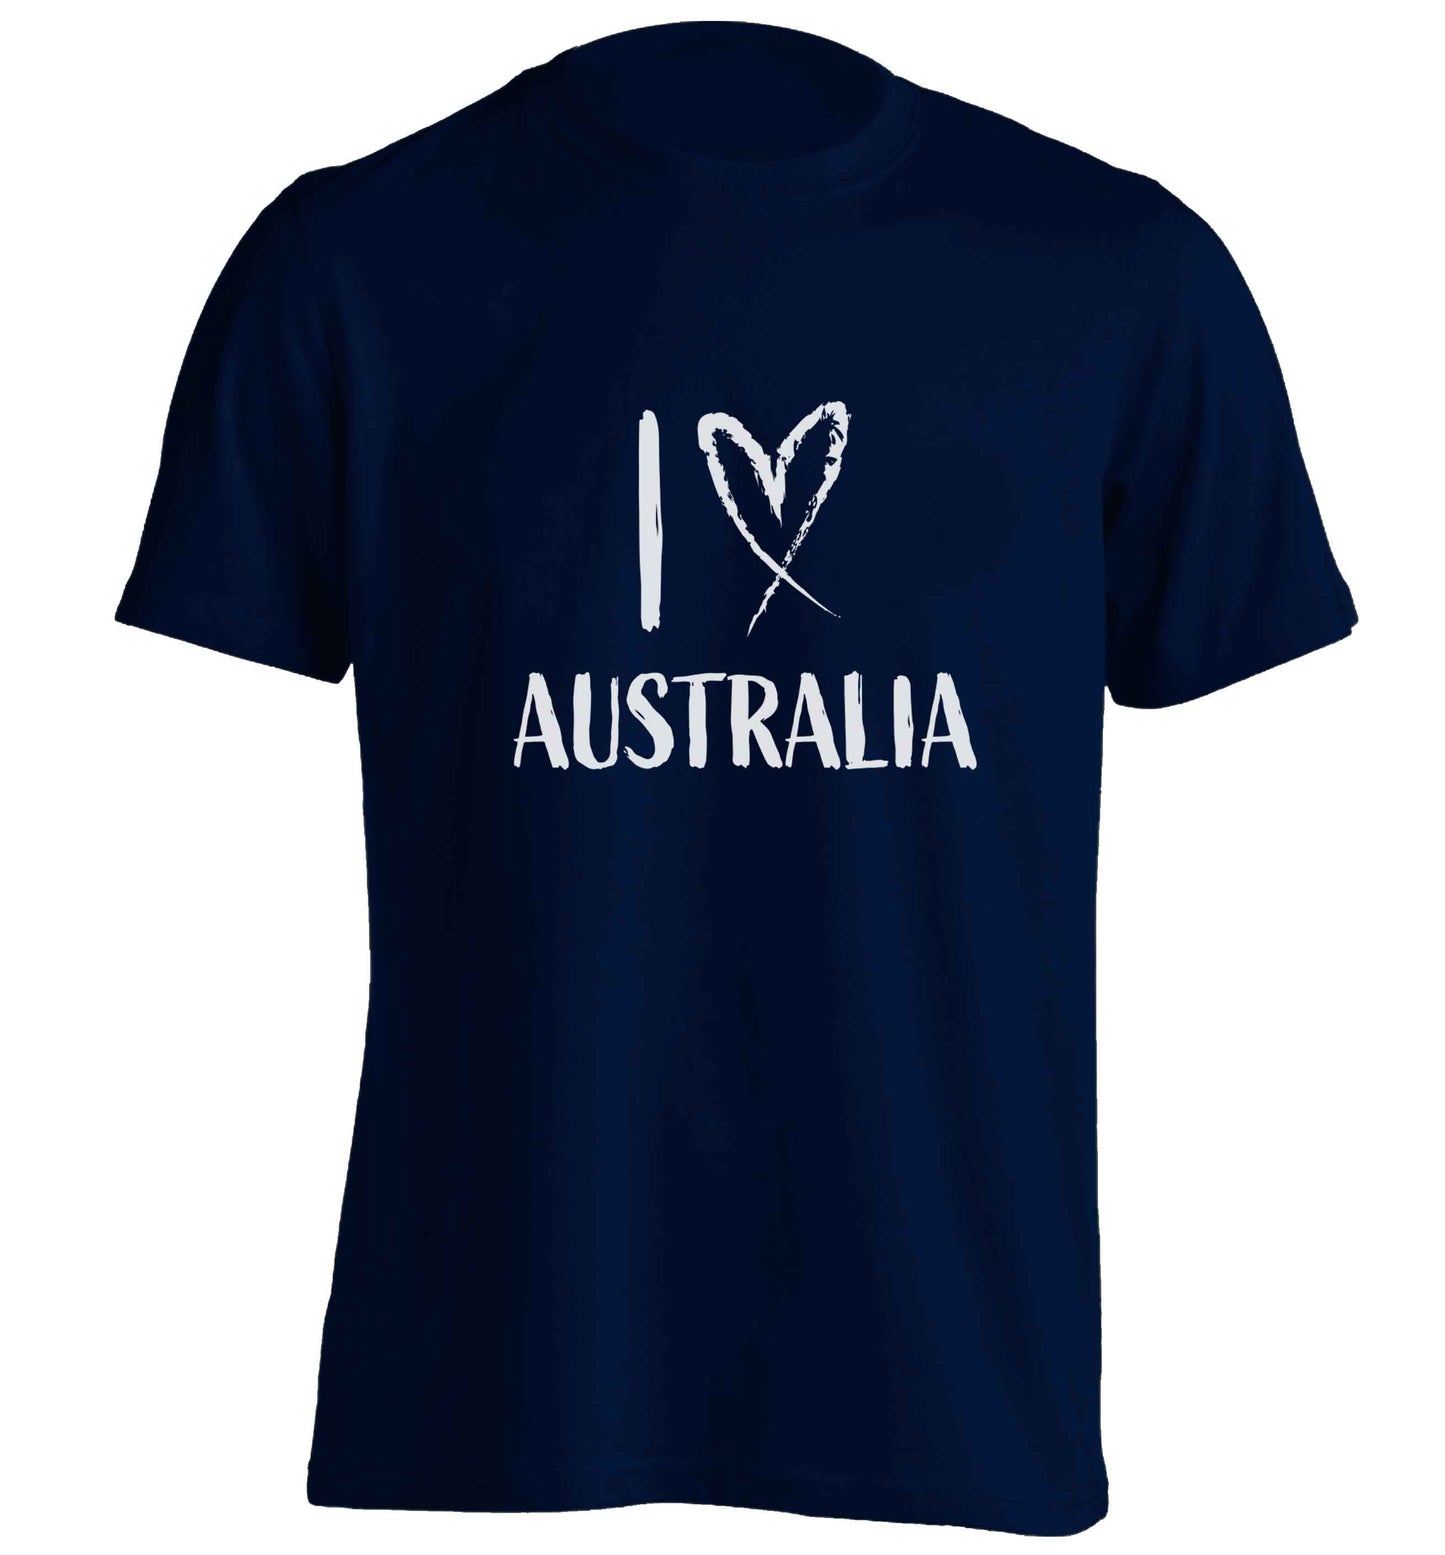 I Love Australia adults unisex navy Tshirt 2XL